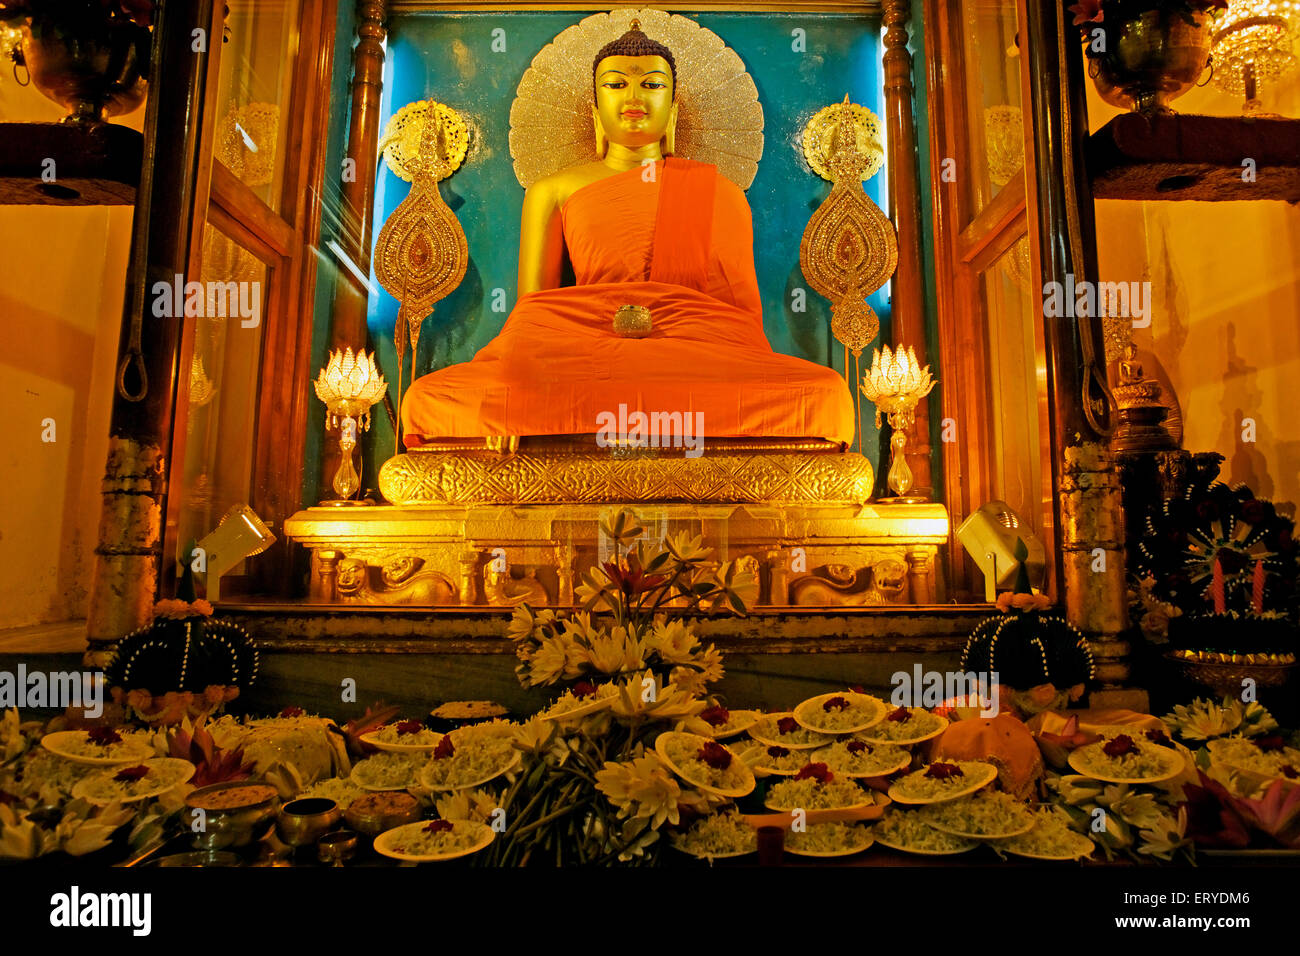 500+ Gautama Buddha Pictures [HD] | Download Free Images on Unsplash